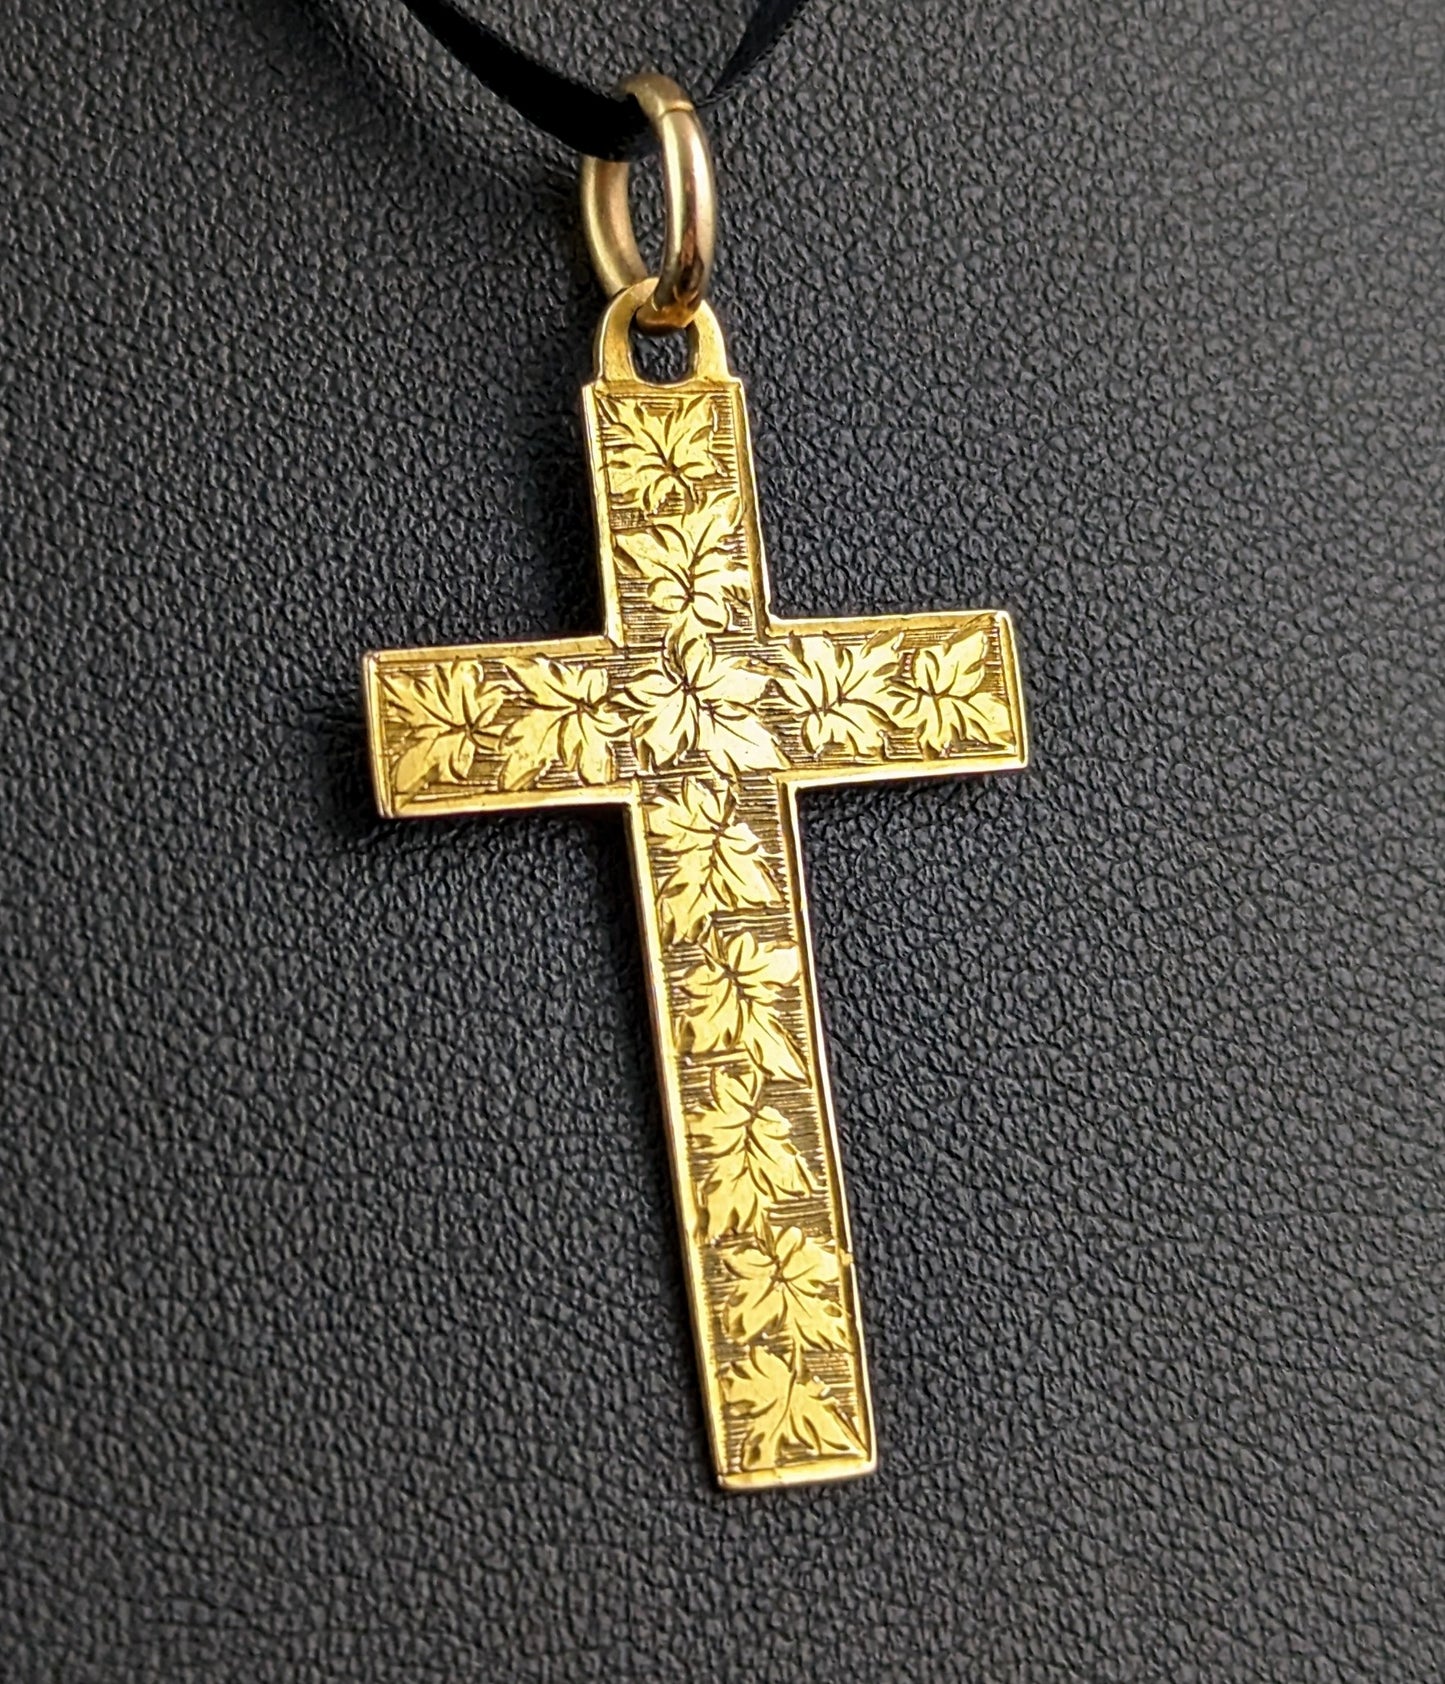 Antique 9ct gold cross pendant, Victorian, engraved